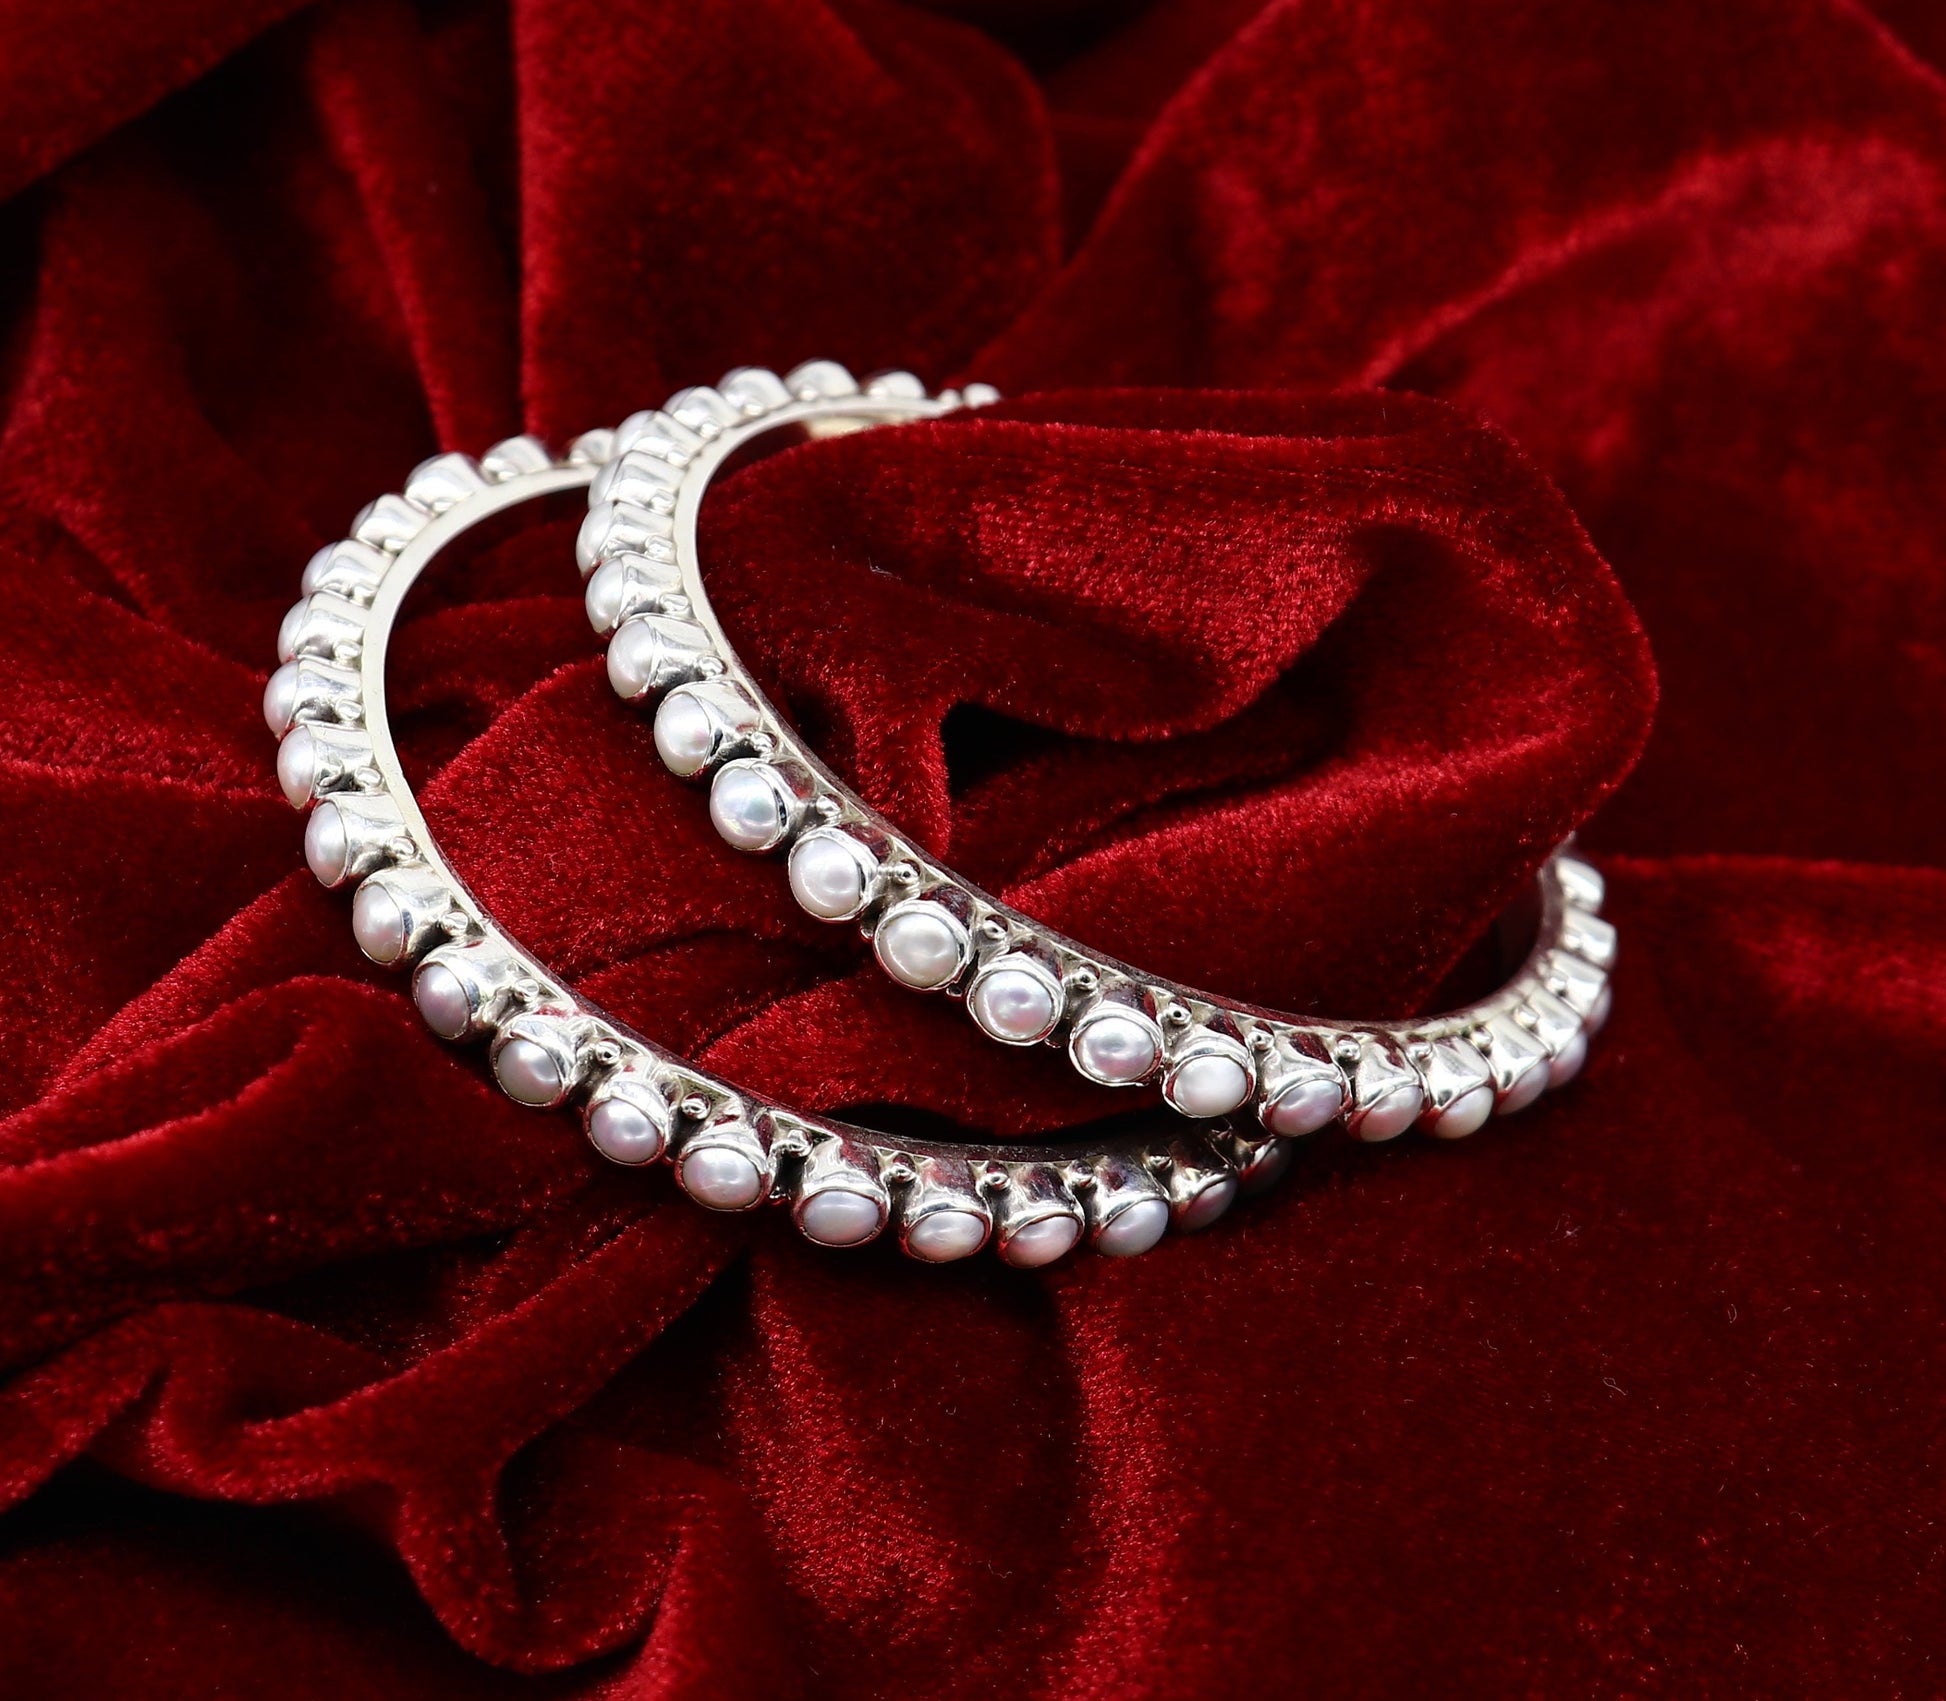 Excellent designer 925 sterling silver pearl bangle bracelet, fabulous oxidized customized brides gifting pearl bangle bracelet ba102 - TRIBAL ORNAMENTS